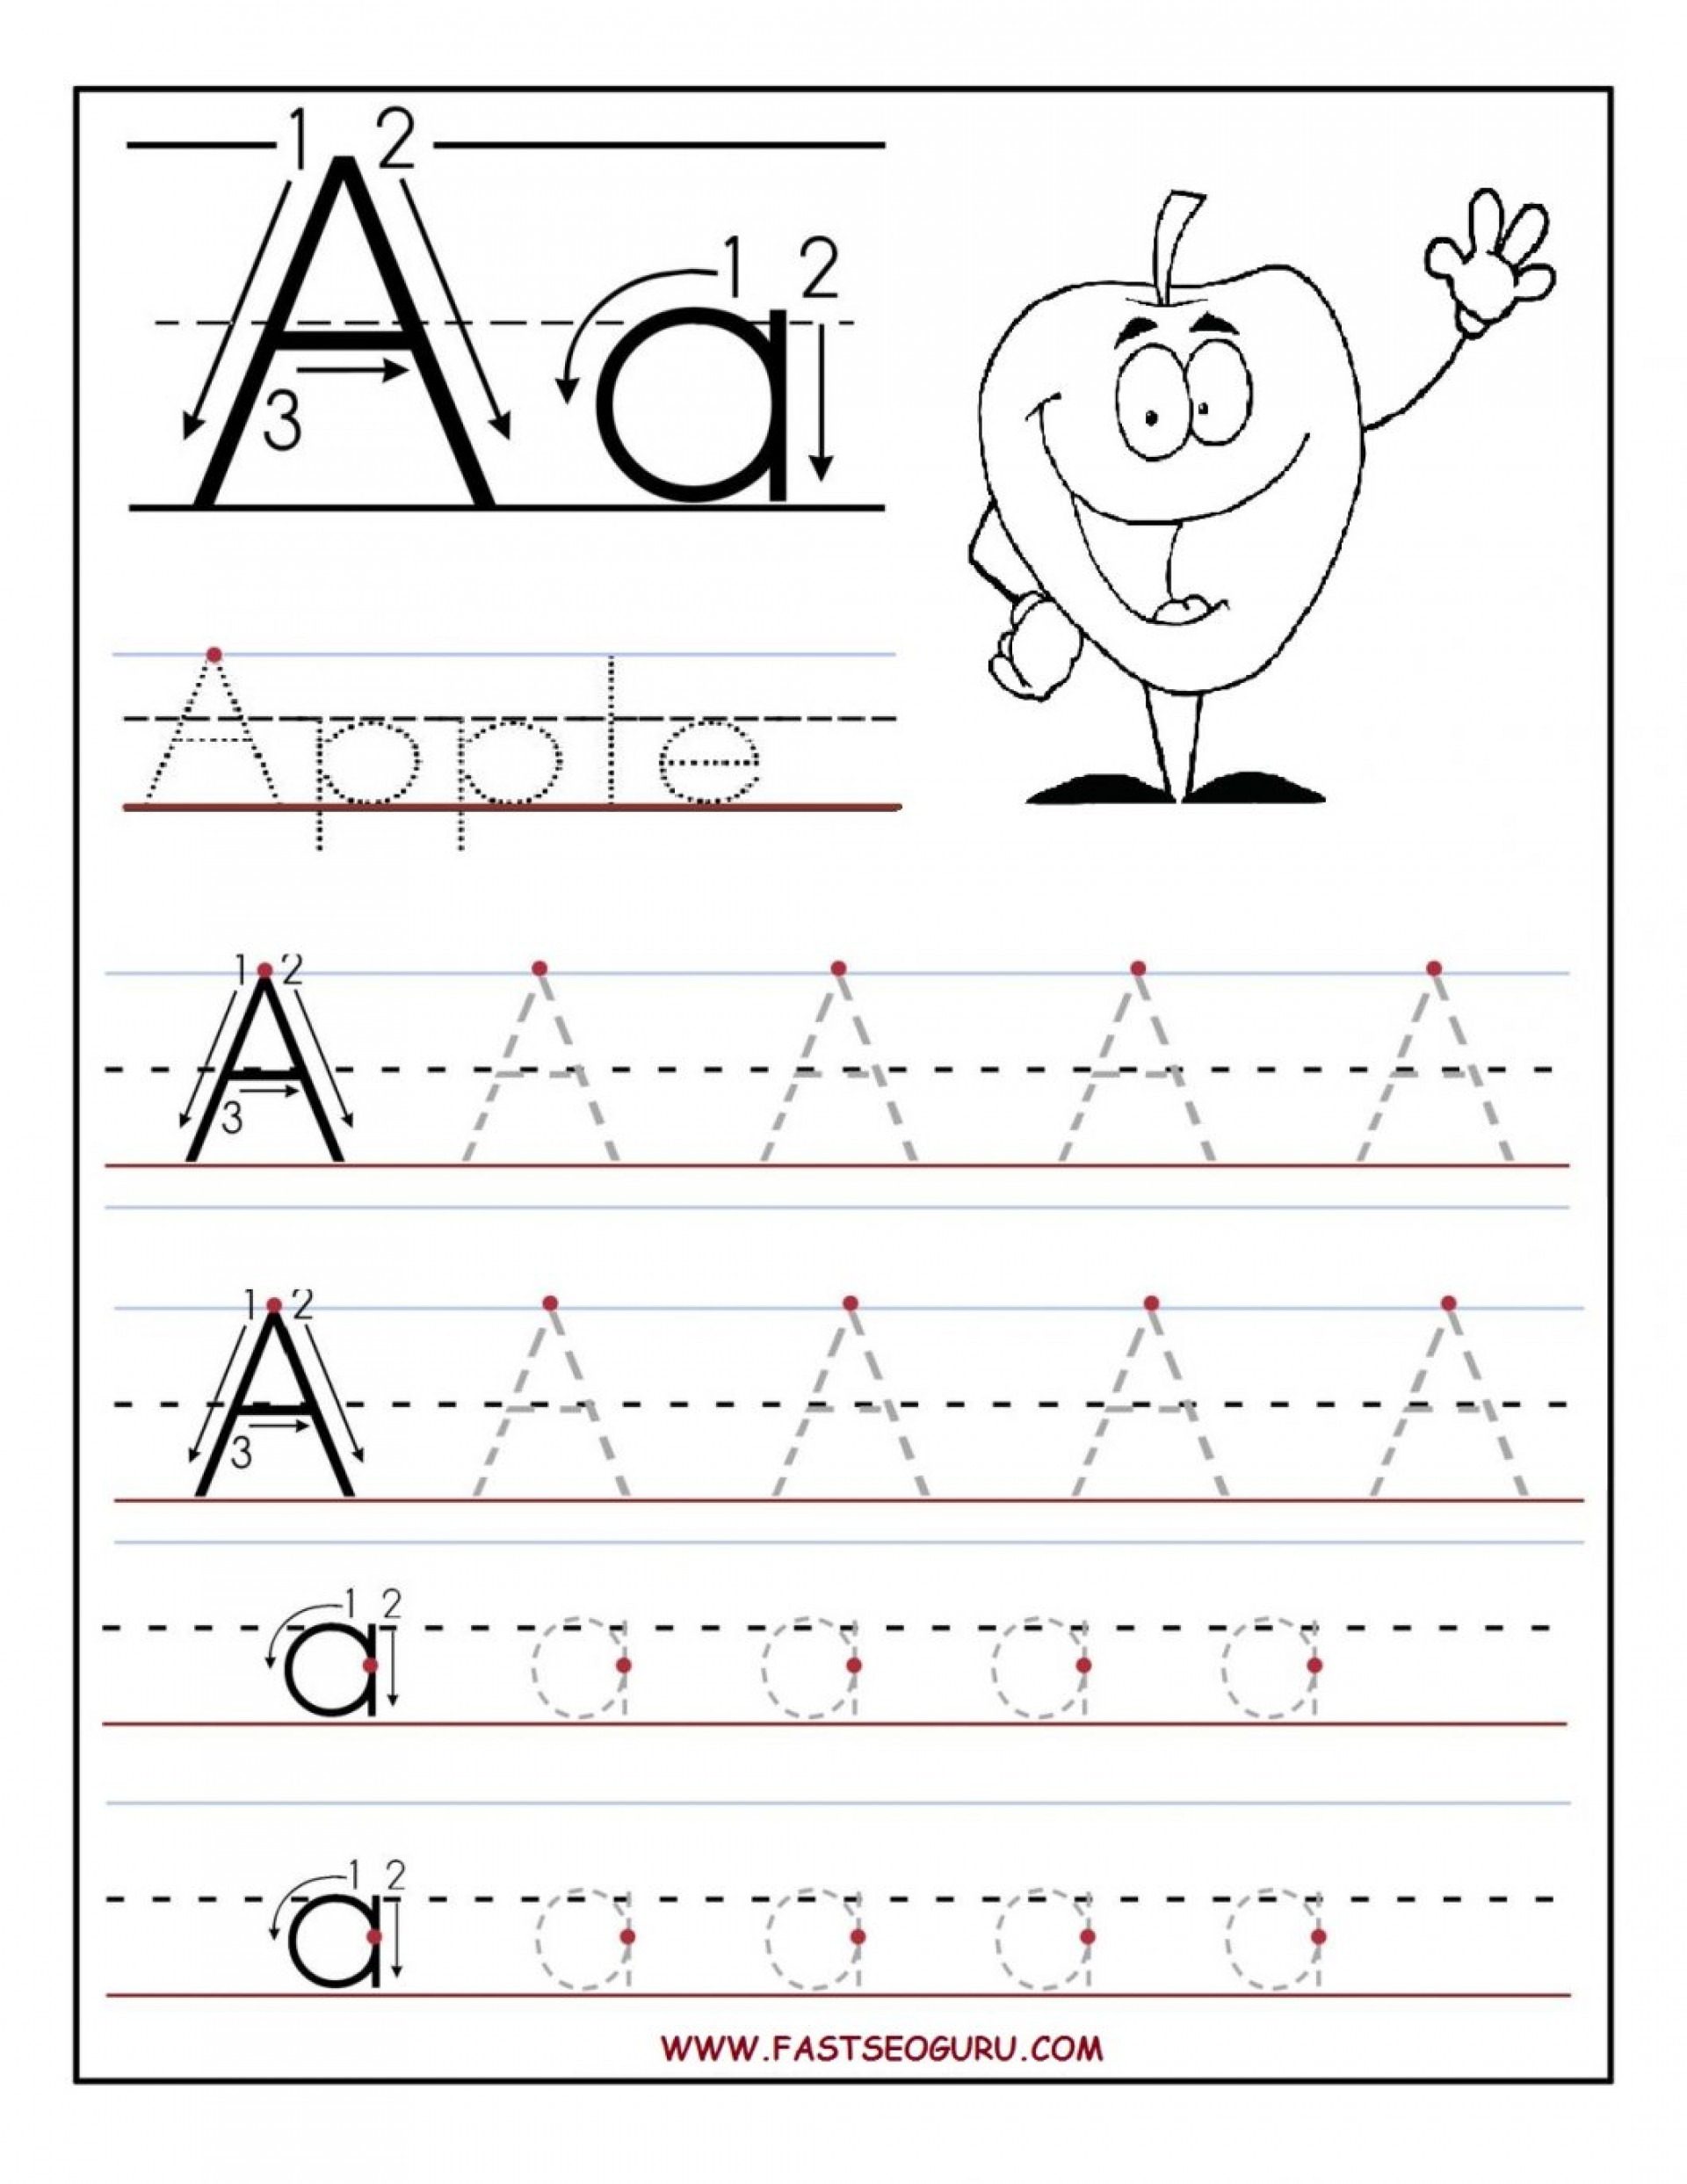 Coloring Book : Coloring Book Worksheet Trace Letters regarding Tracing Worksheets For Kindergarten On Letters